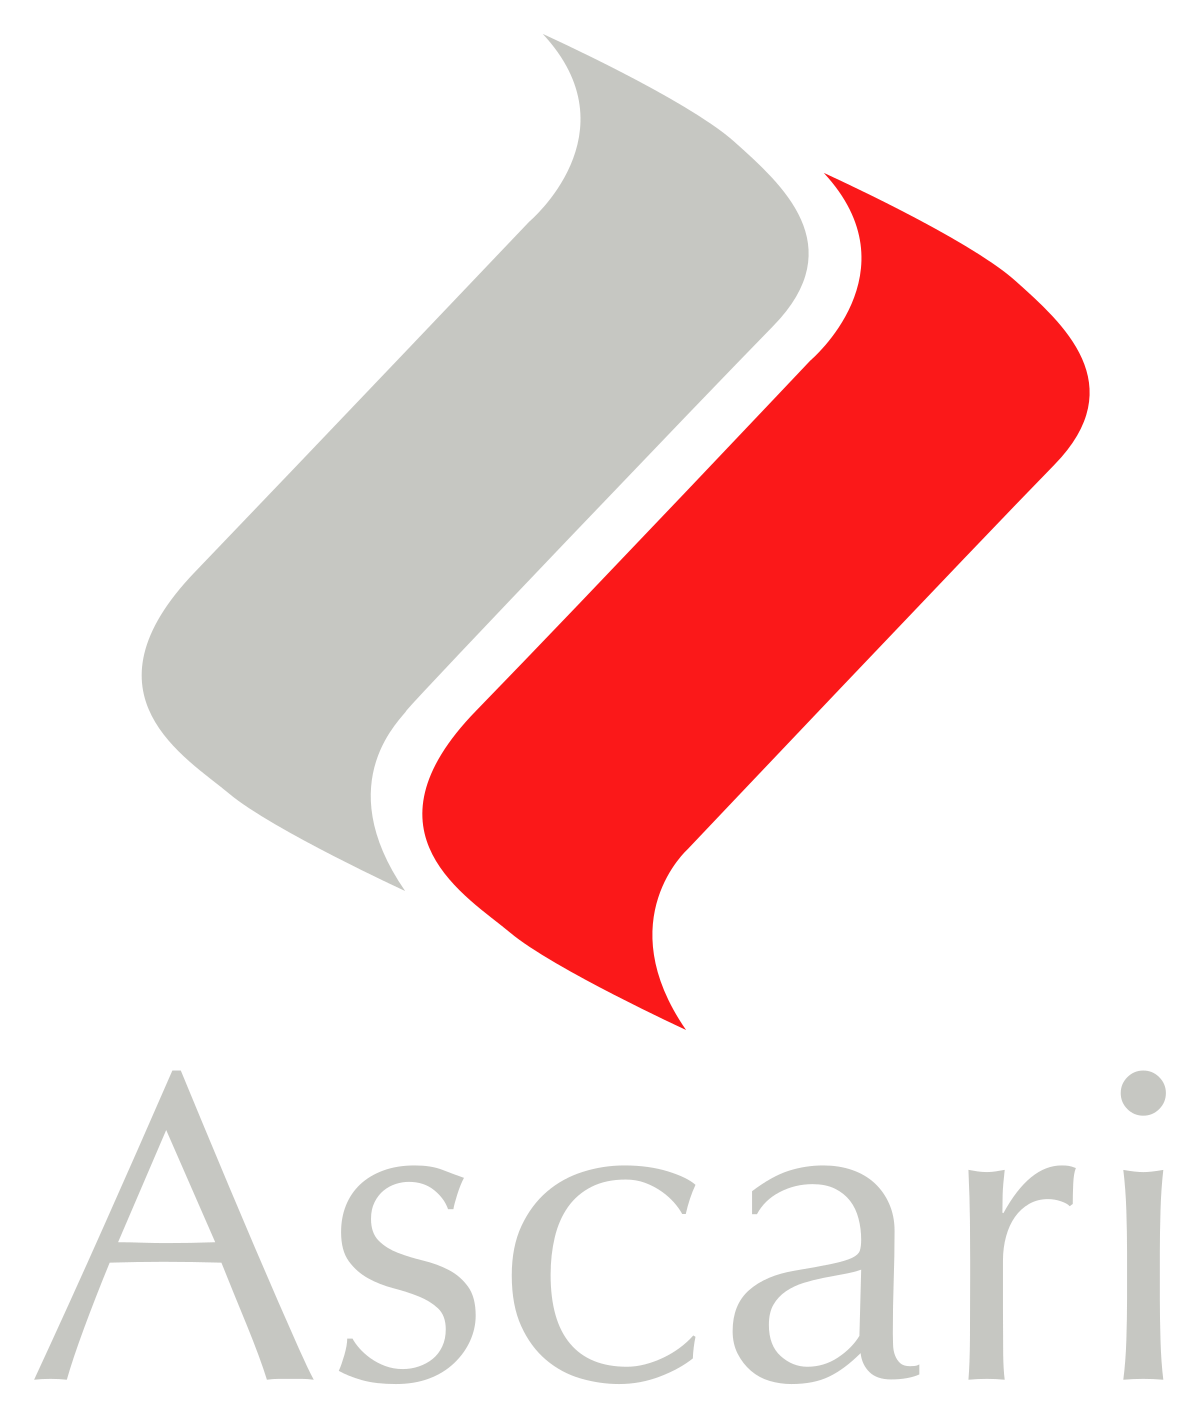 Ascari Cars - Wikipedia